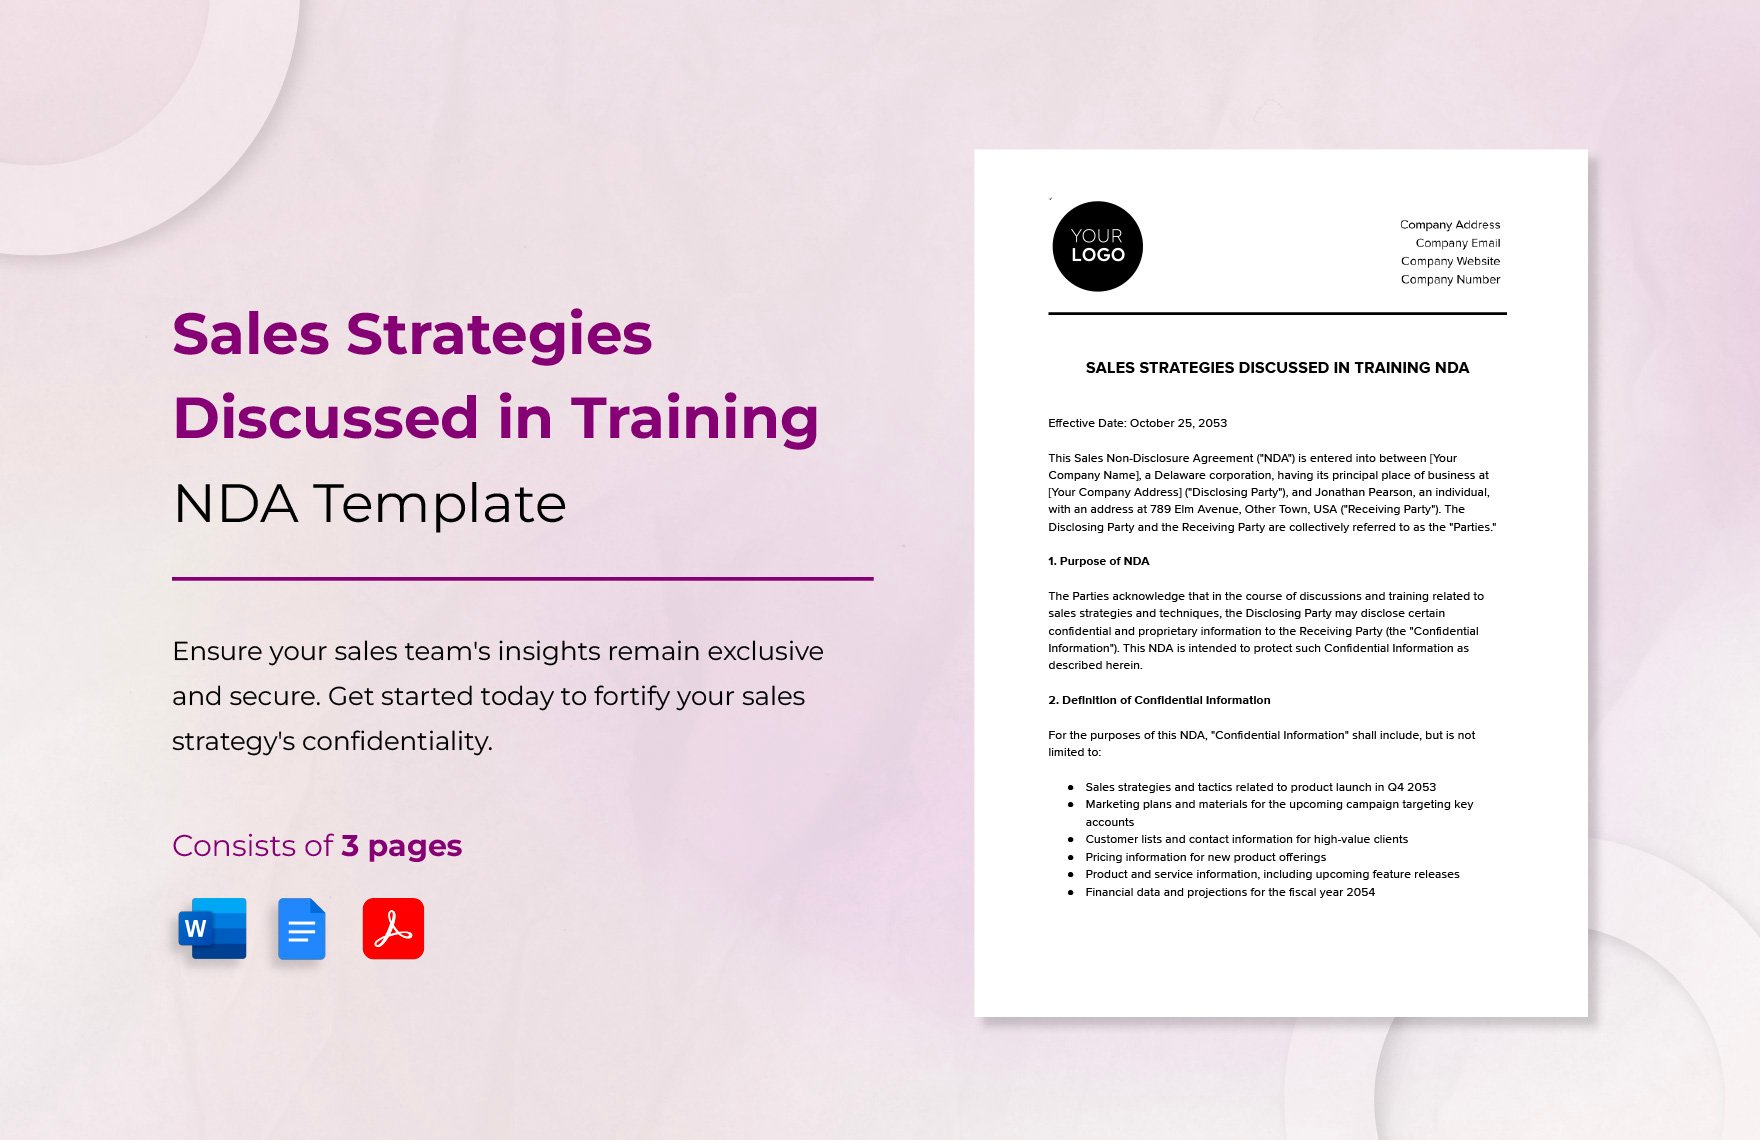 Sales Strategies Discussed in Training NDA Template